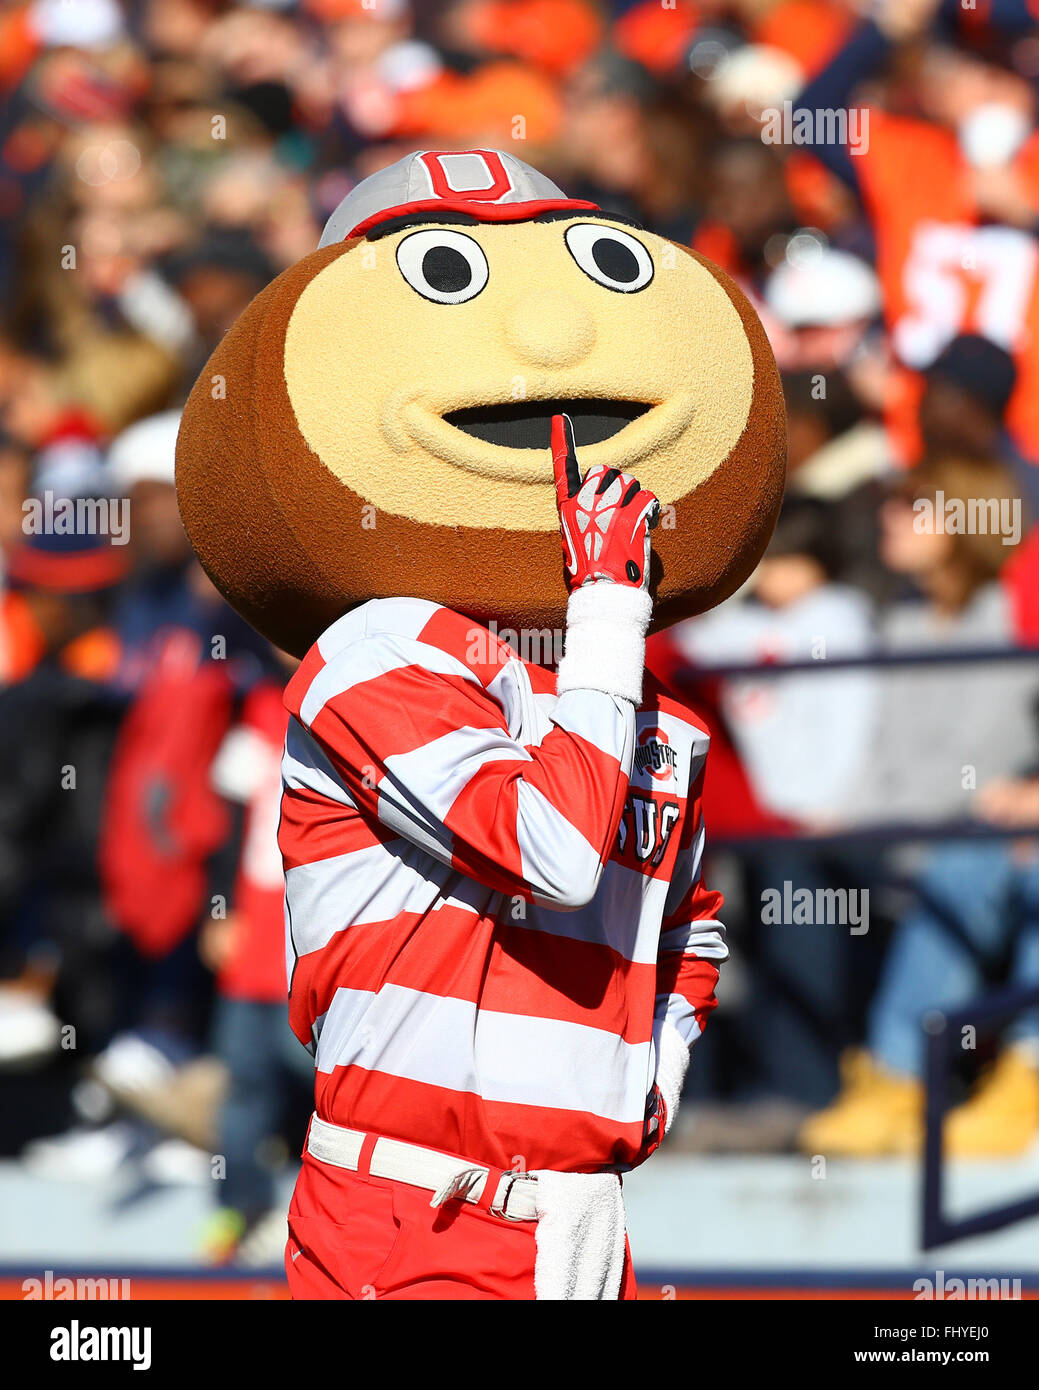 ohio-state-buckeyes-mascot-brutus-is-seen-during-an-ncaa-football-FHYEJ0.jpg